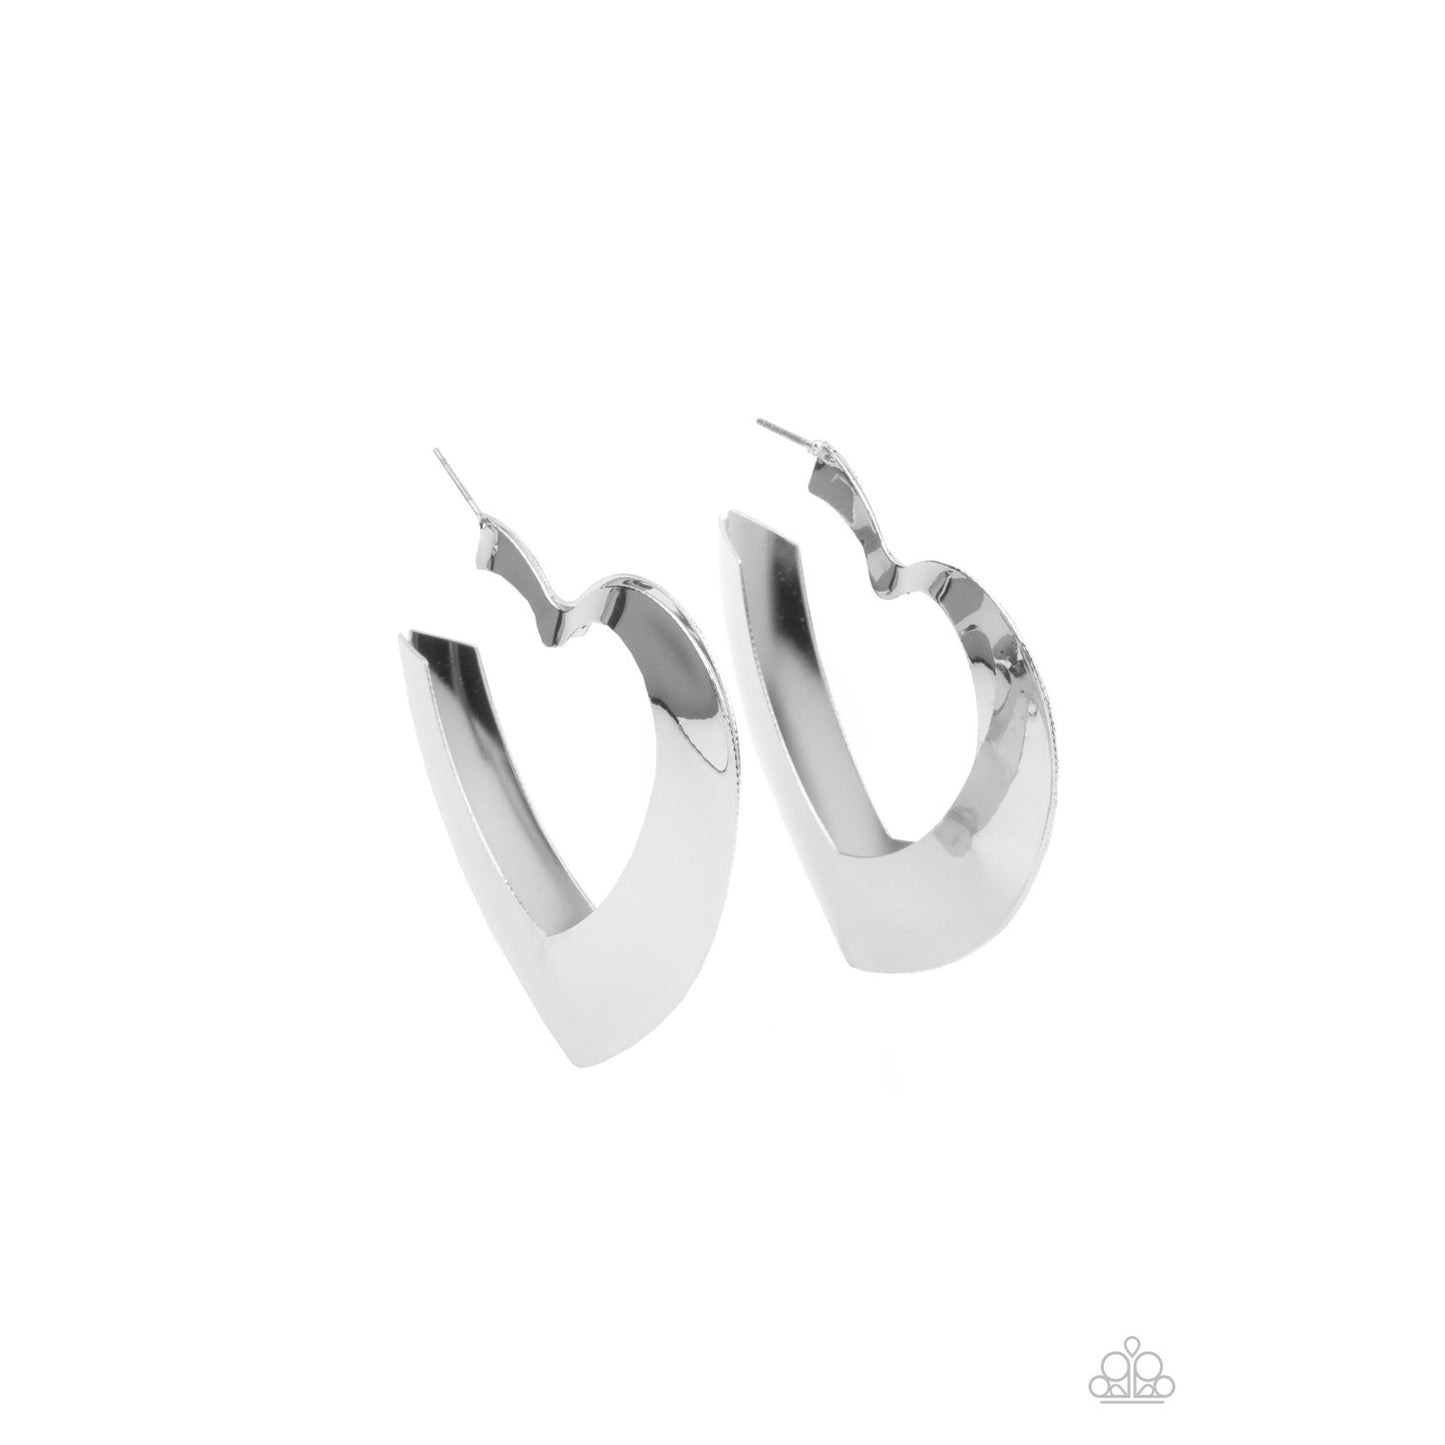 Heart-Racing Radiance - Silver Heart Earrings - Paparazzi Accessories - GlaMarous Titi Jewels